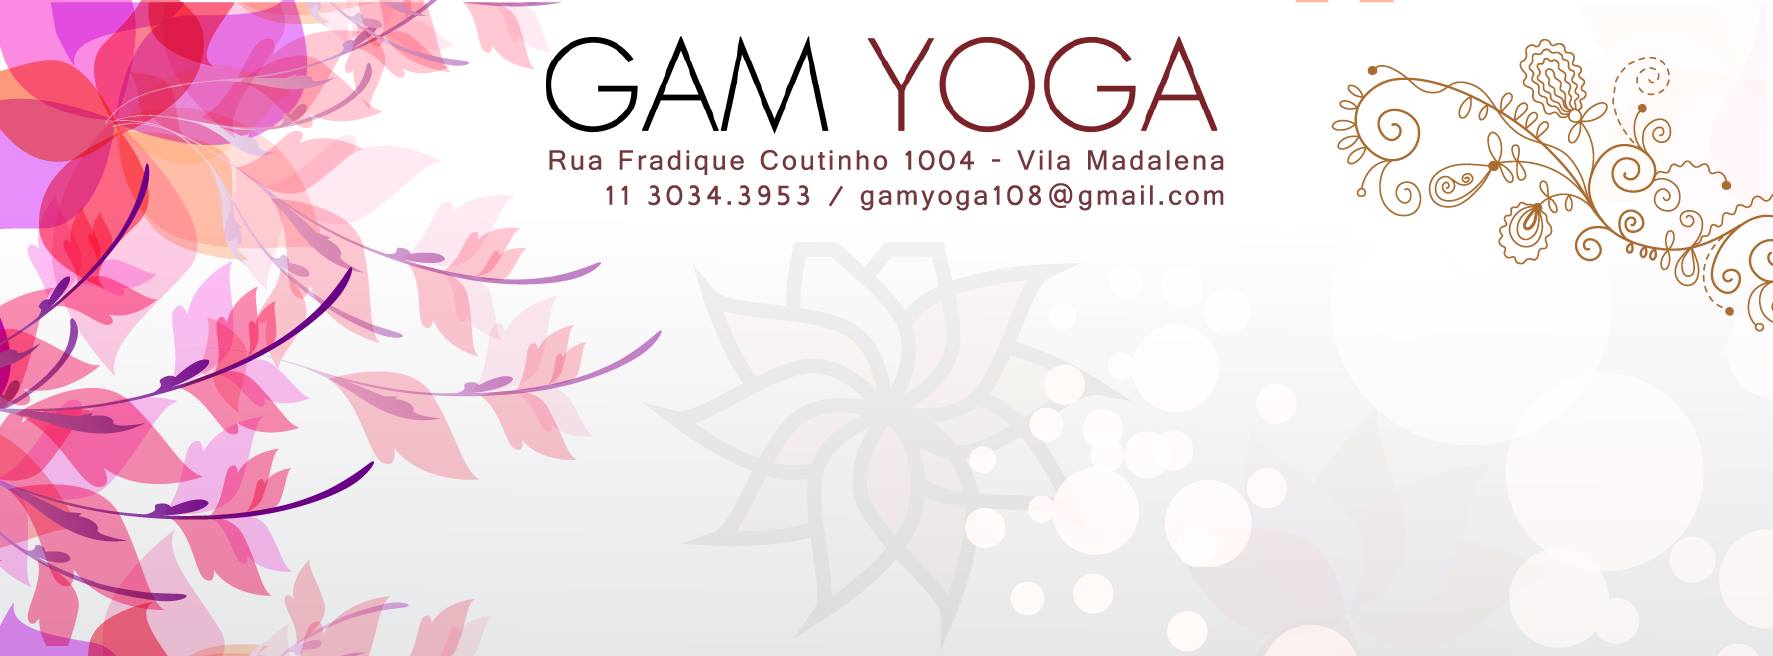 Gam Yoga Center Sao Paulo